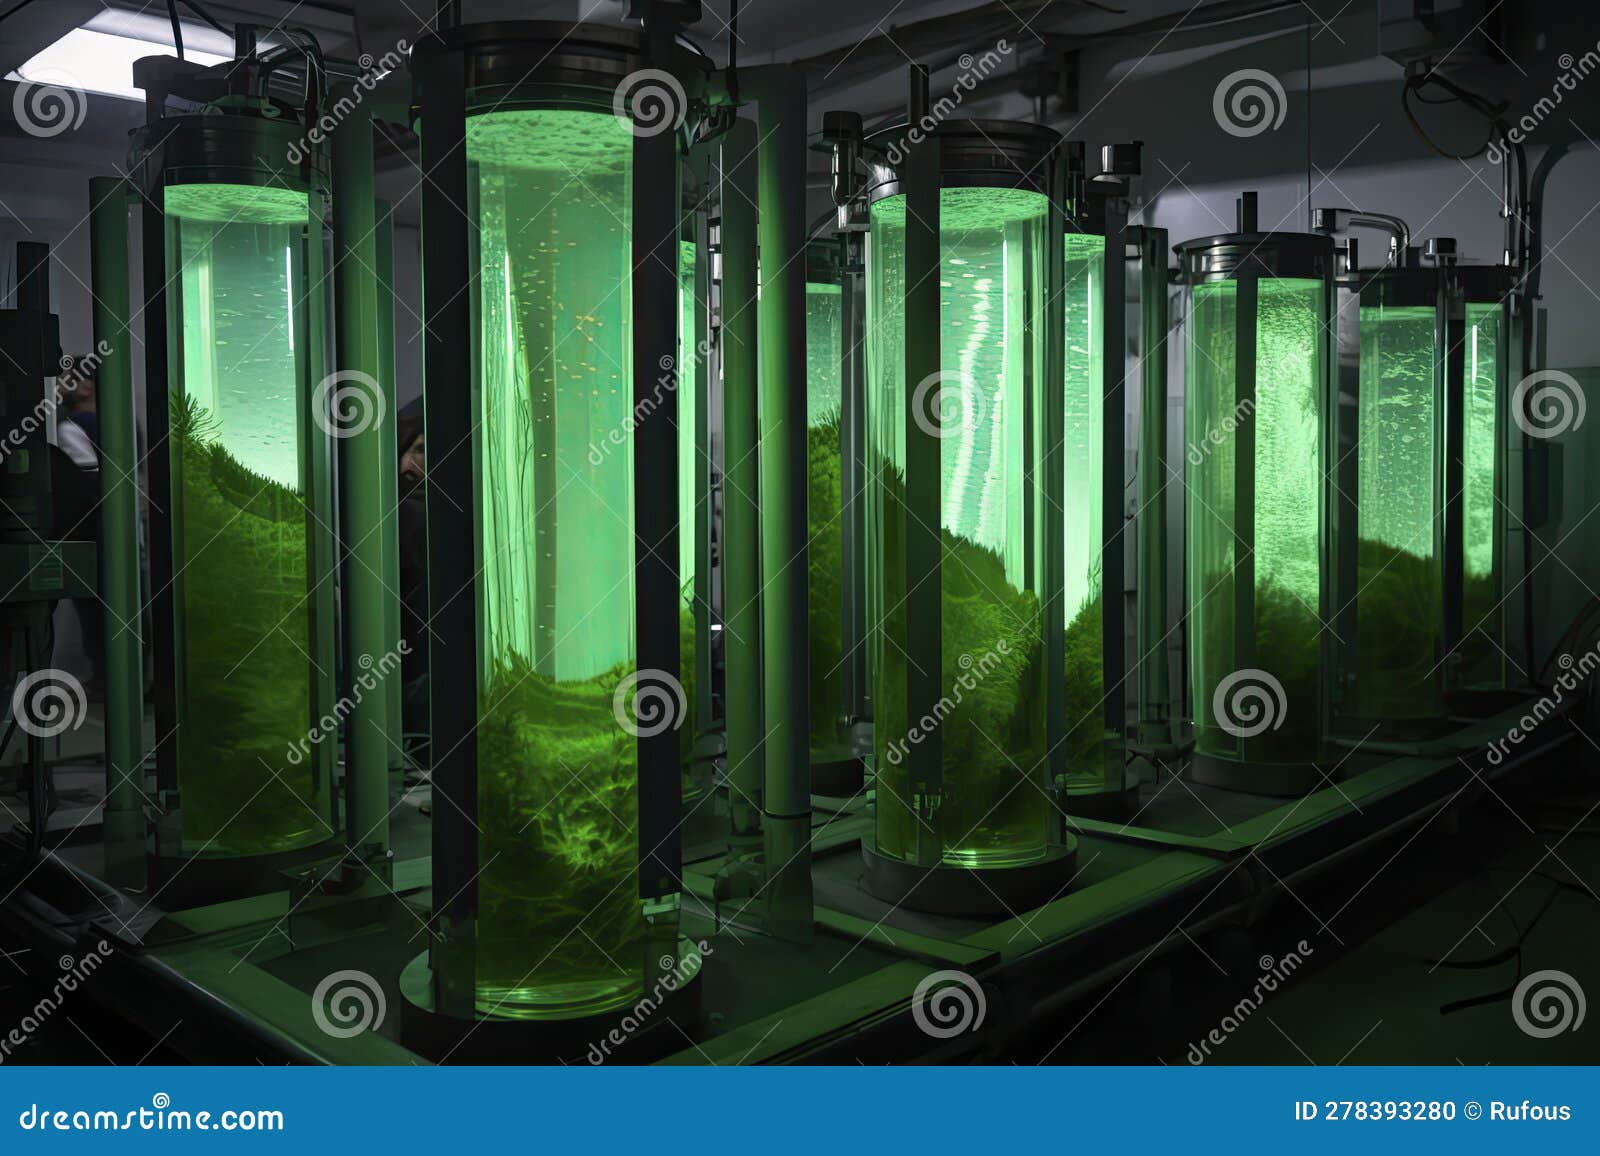 Tubular Algae Bioreactors Fixing CO2 To Produce Biofuel Stock Photo ...